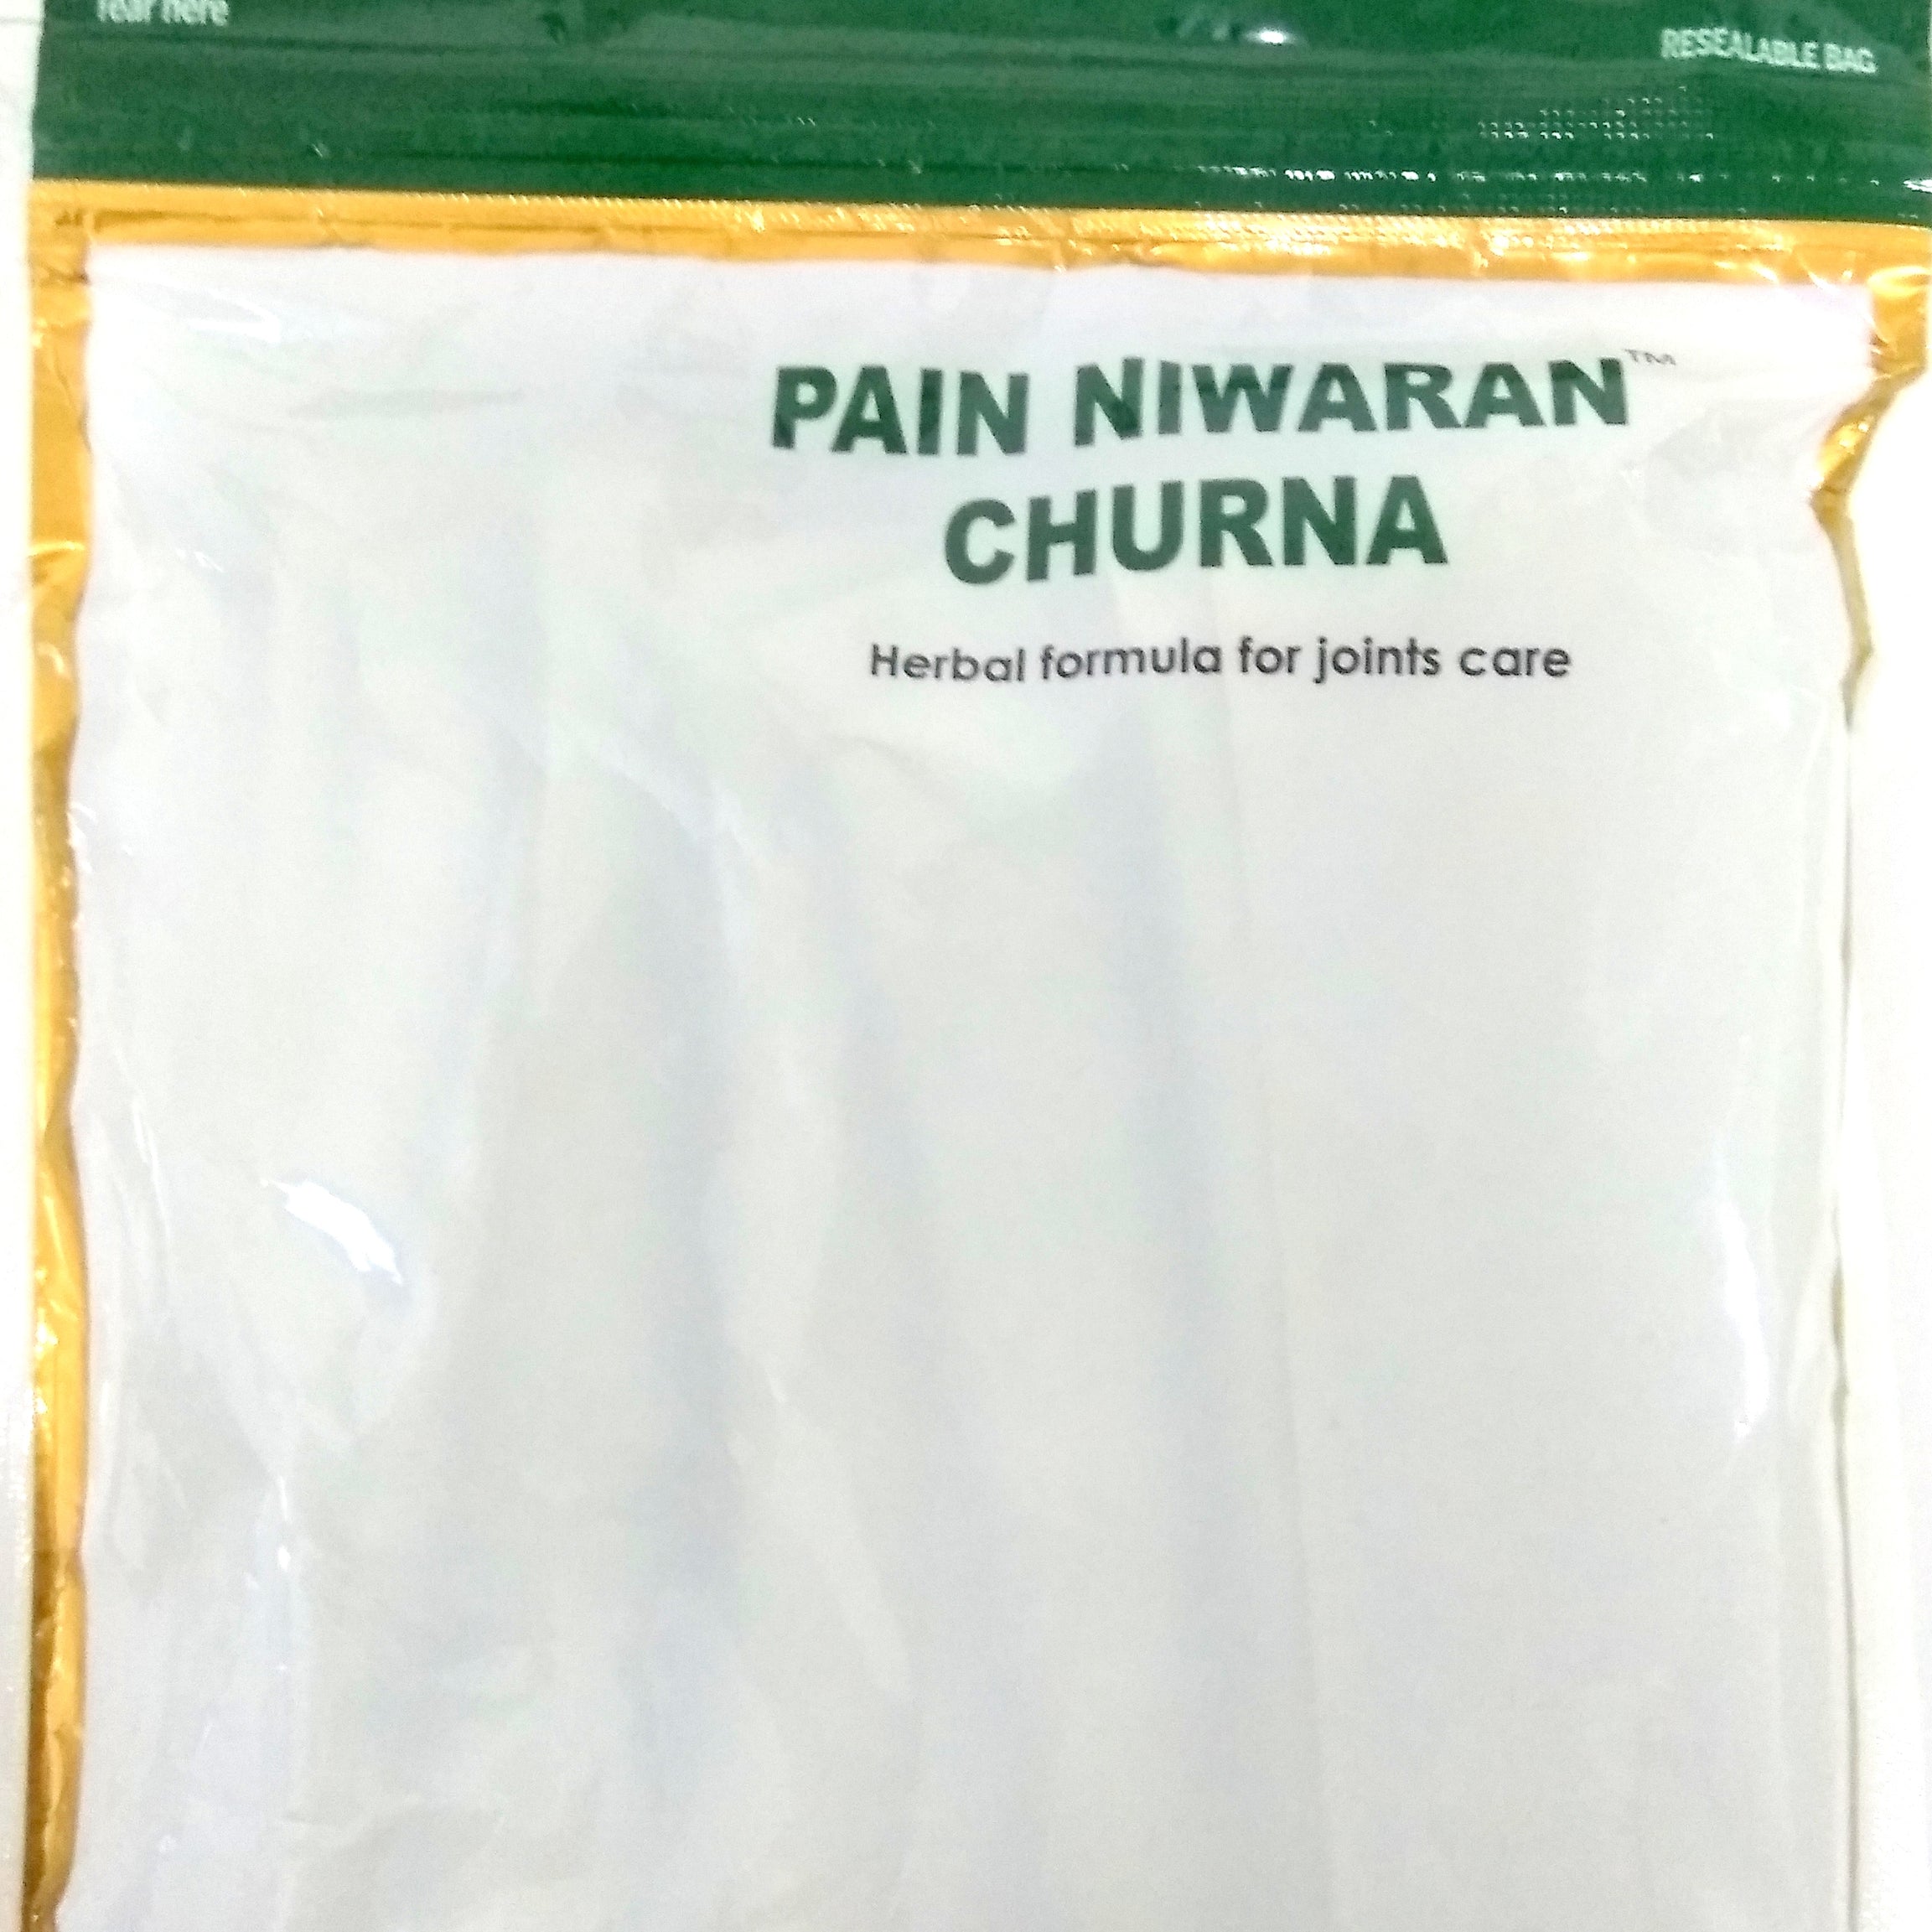 Shop Rajasthan Herbals Pain Niwaran Churna 135g at price 580.00 from Rajasthan Herbals Online - Ayush Care